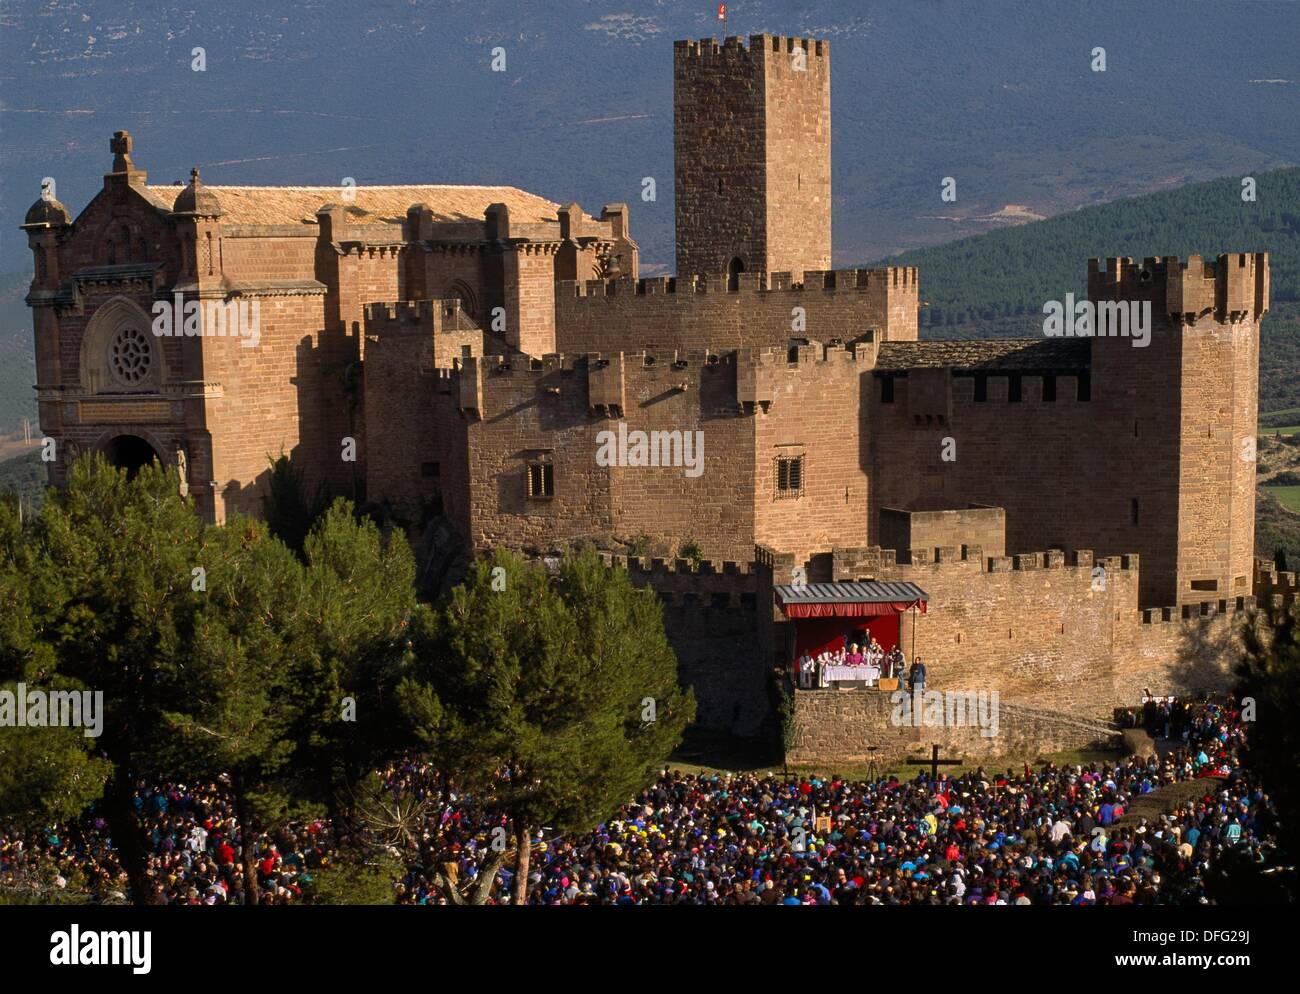 ´Javierada´ pilgrimage to the castle of Javier, Navarra, Spain Stock Photo